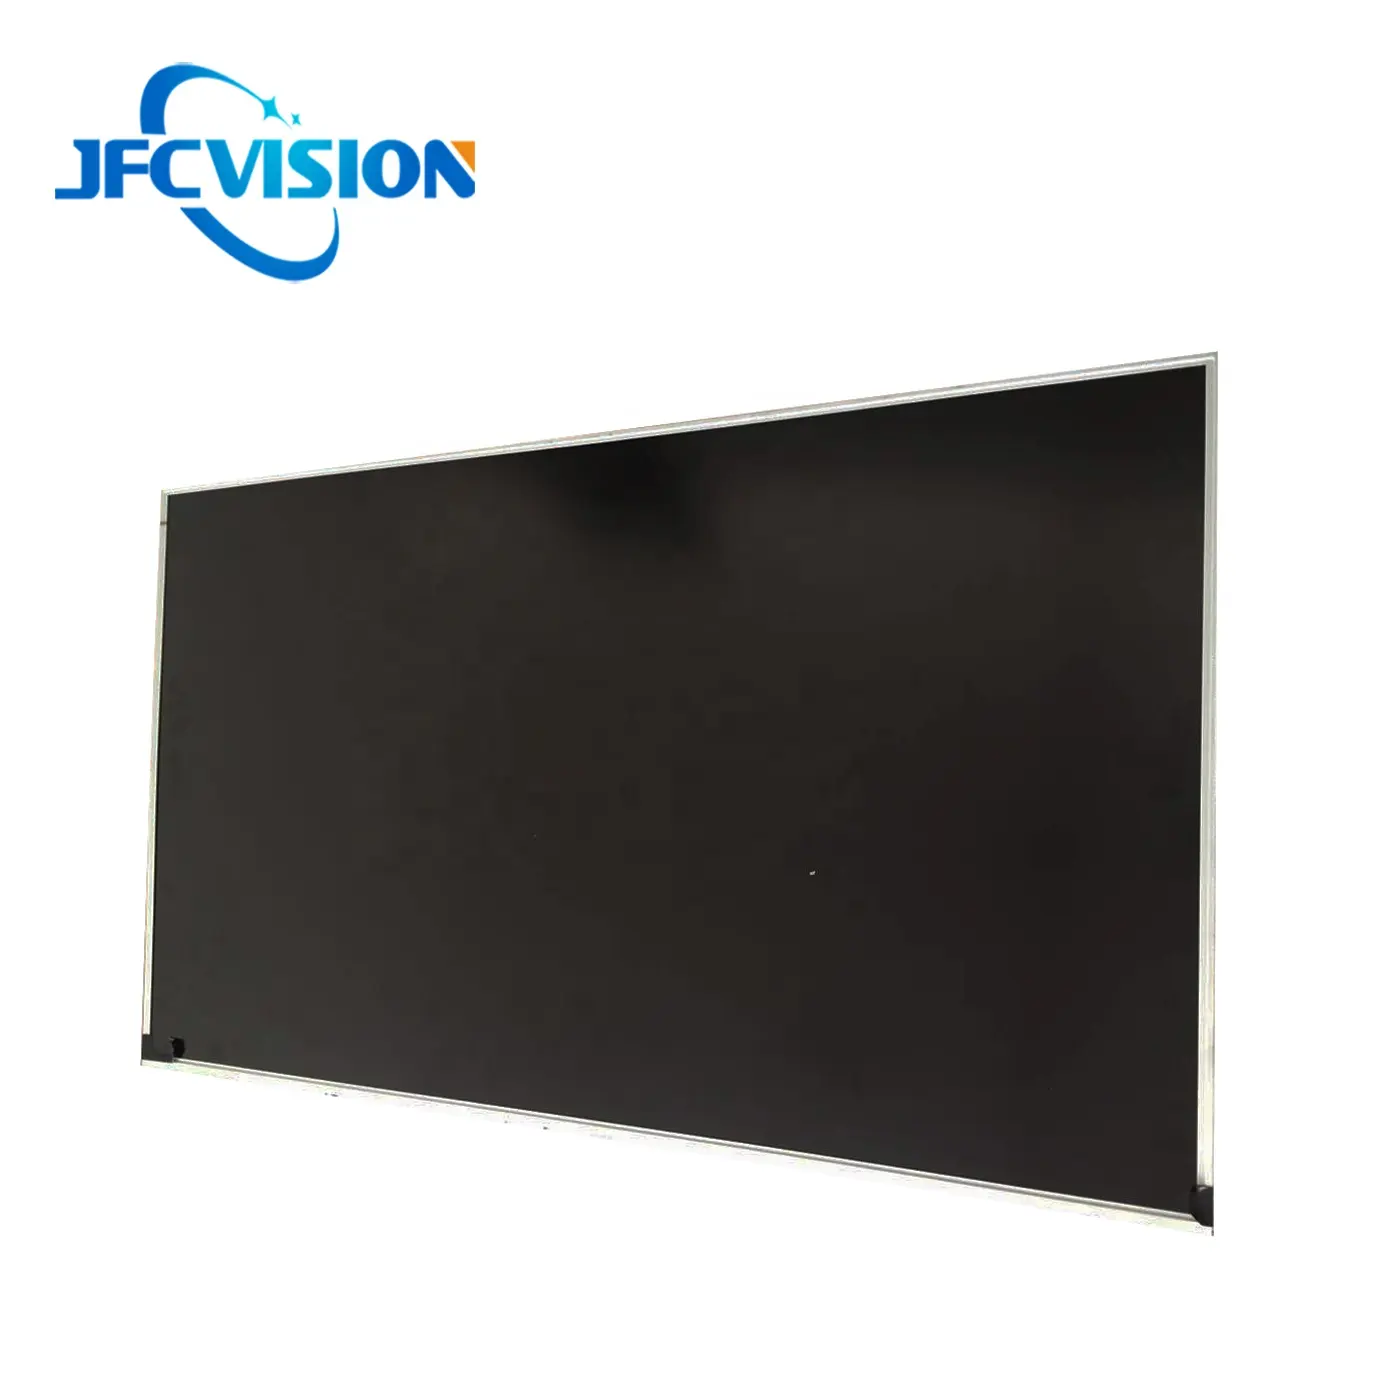 Panel LC430EQE-FHA1 LCD de televisión de 43 pulgadas, UHD, 4K, 60Hz, con interfaz tipo v-by One